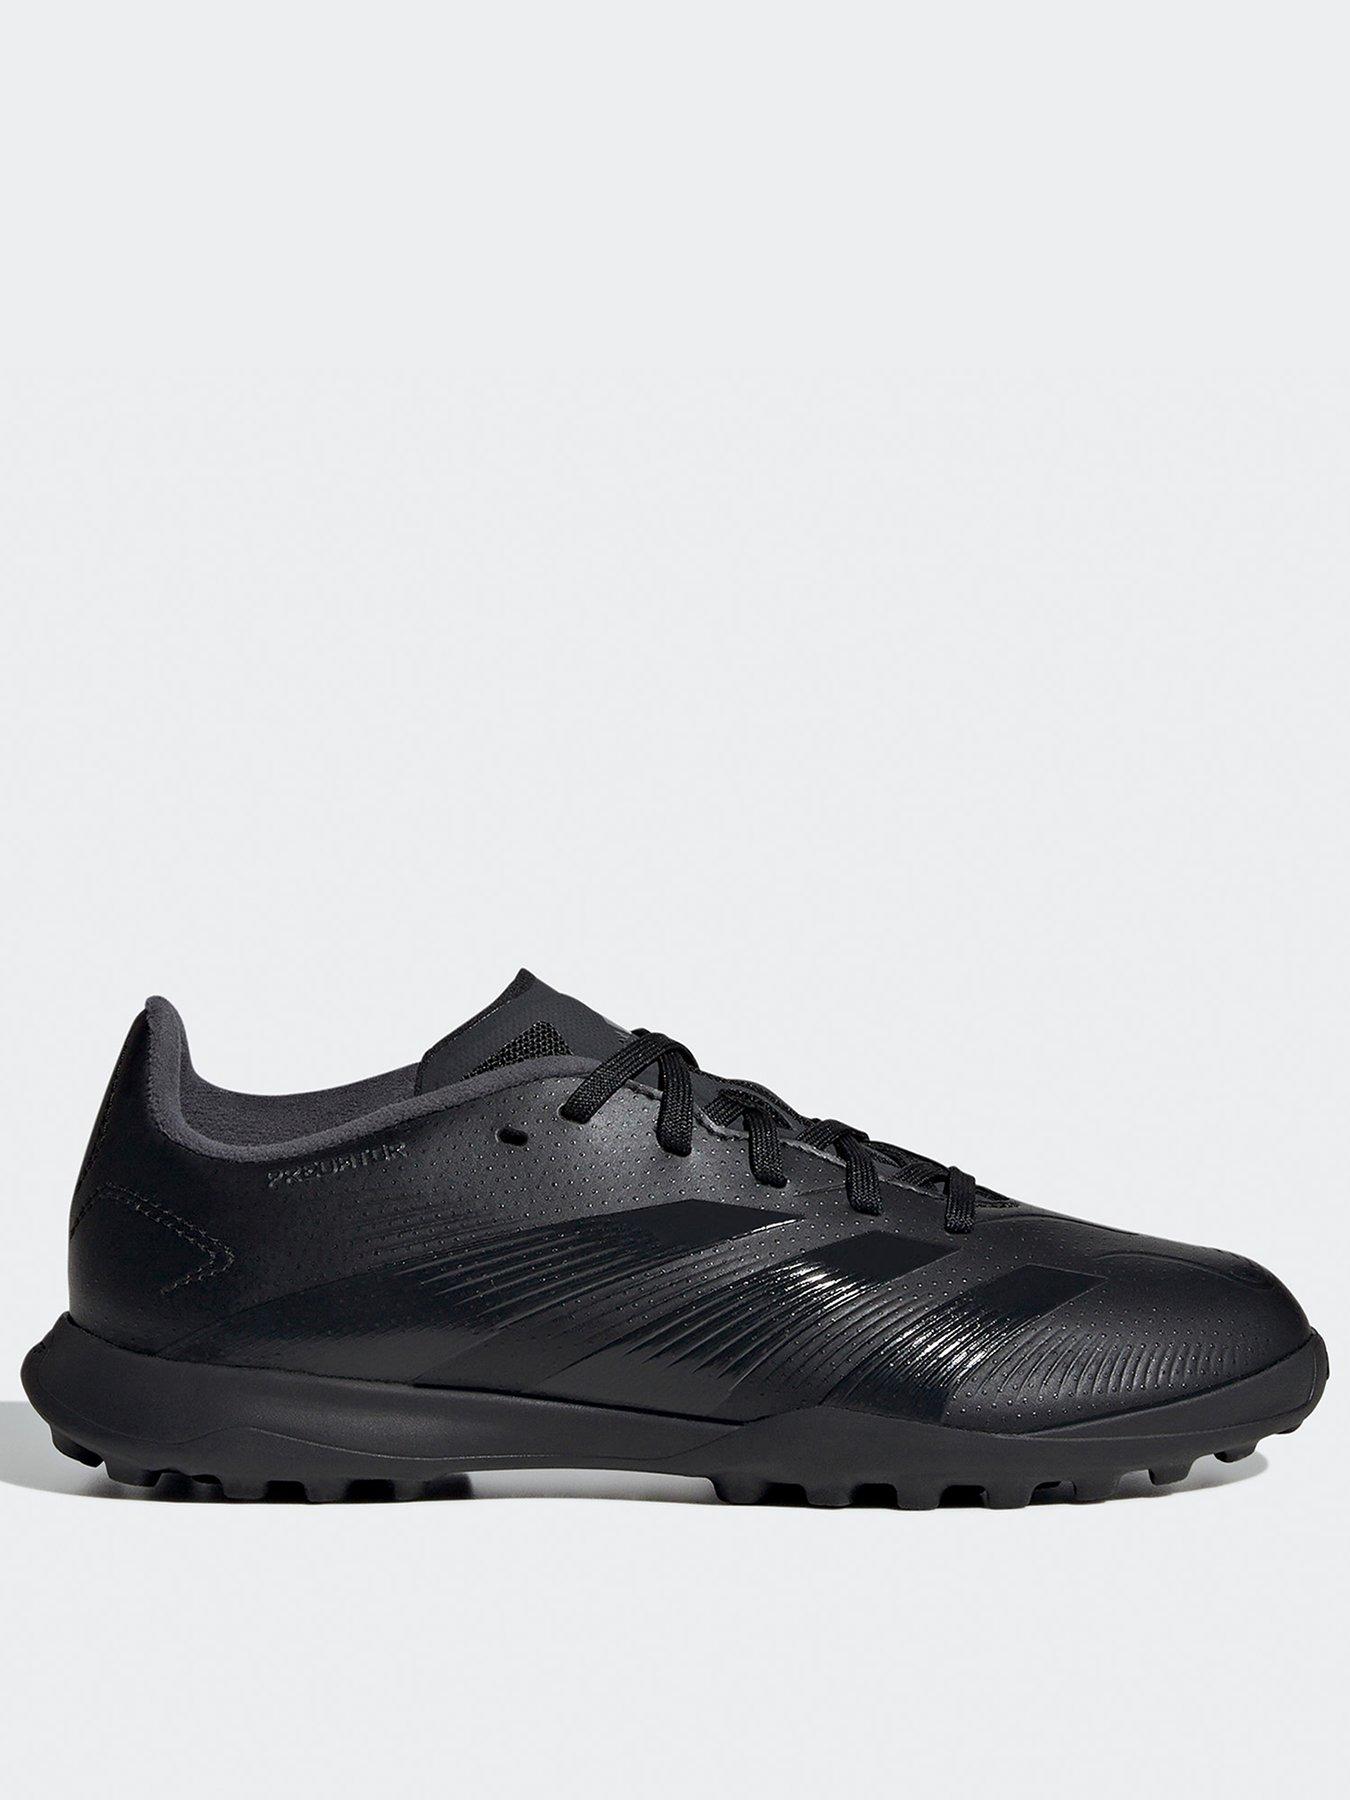 adidas Junior Predator 20.3 Astro Turf Football Boot -black, Black, Size 2